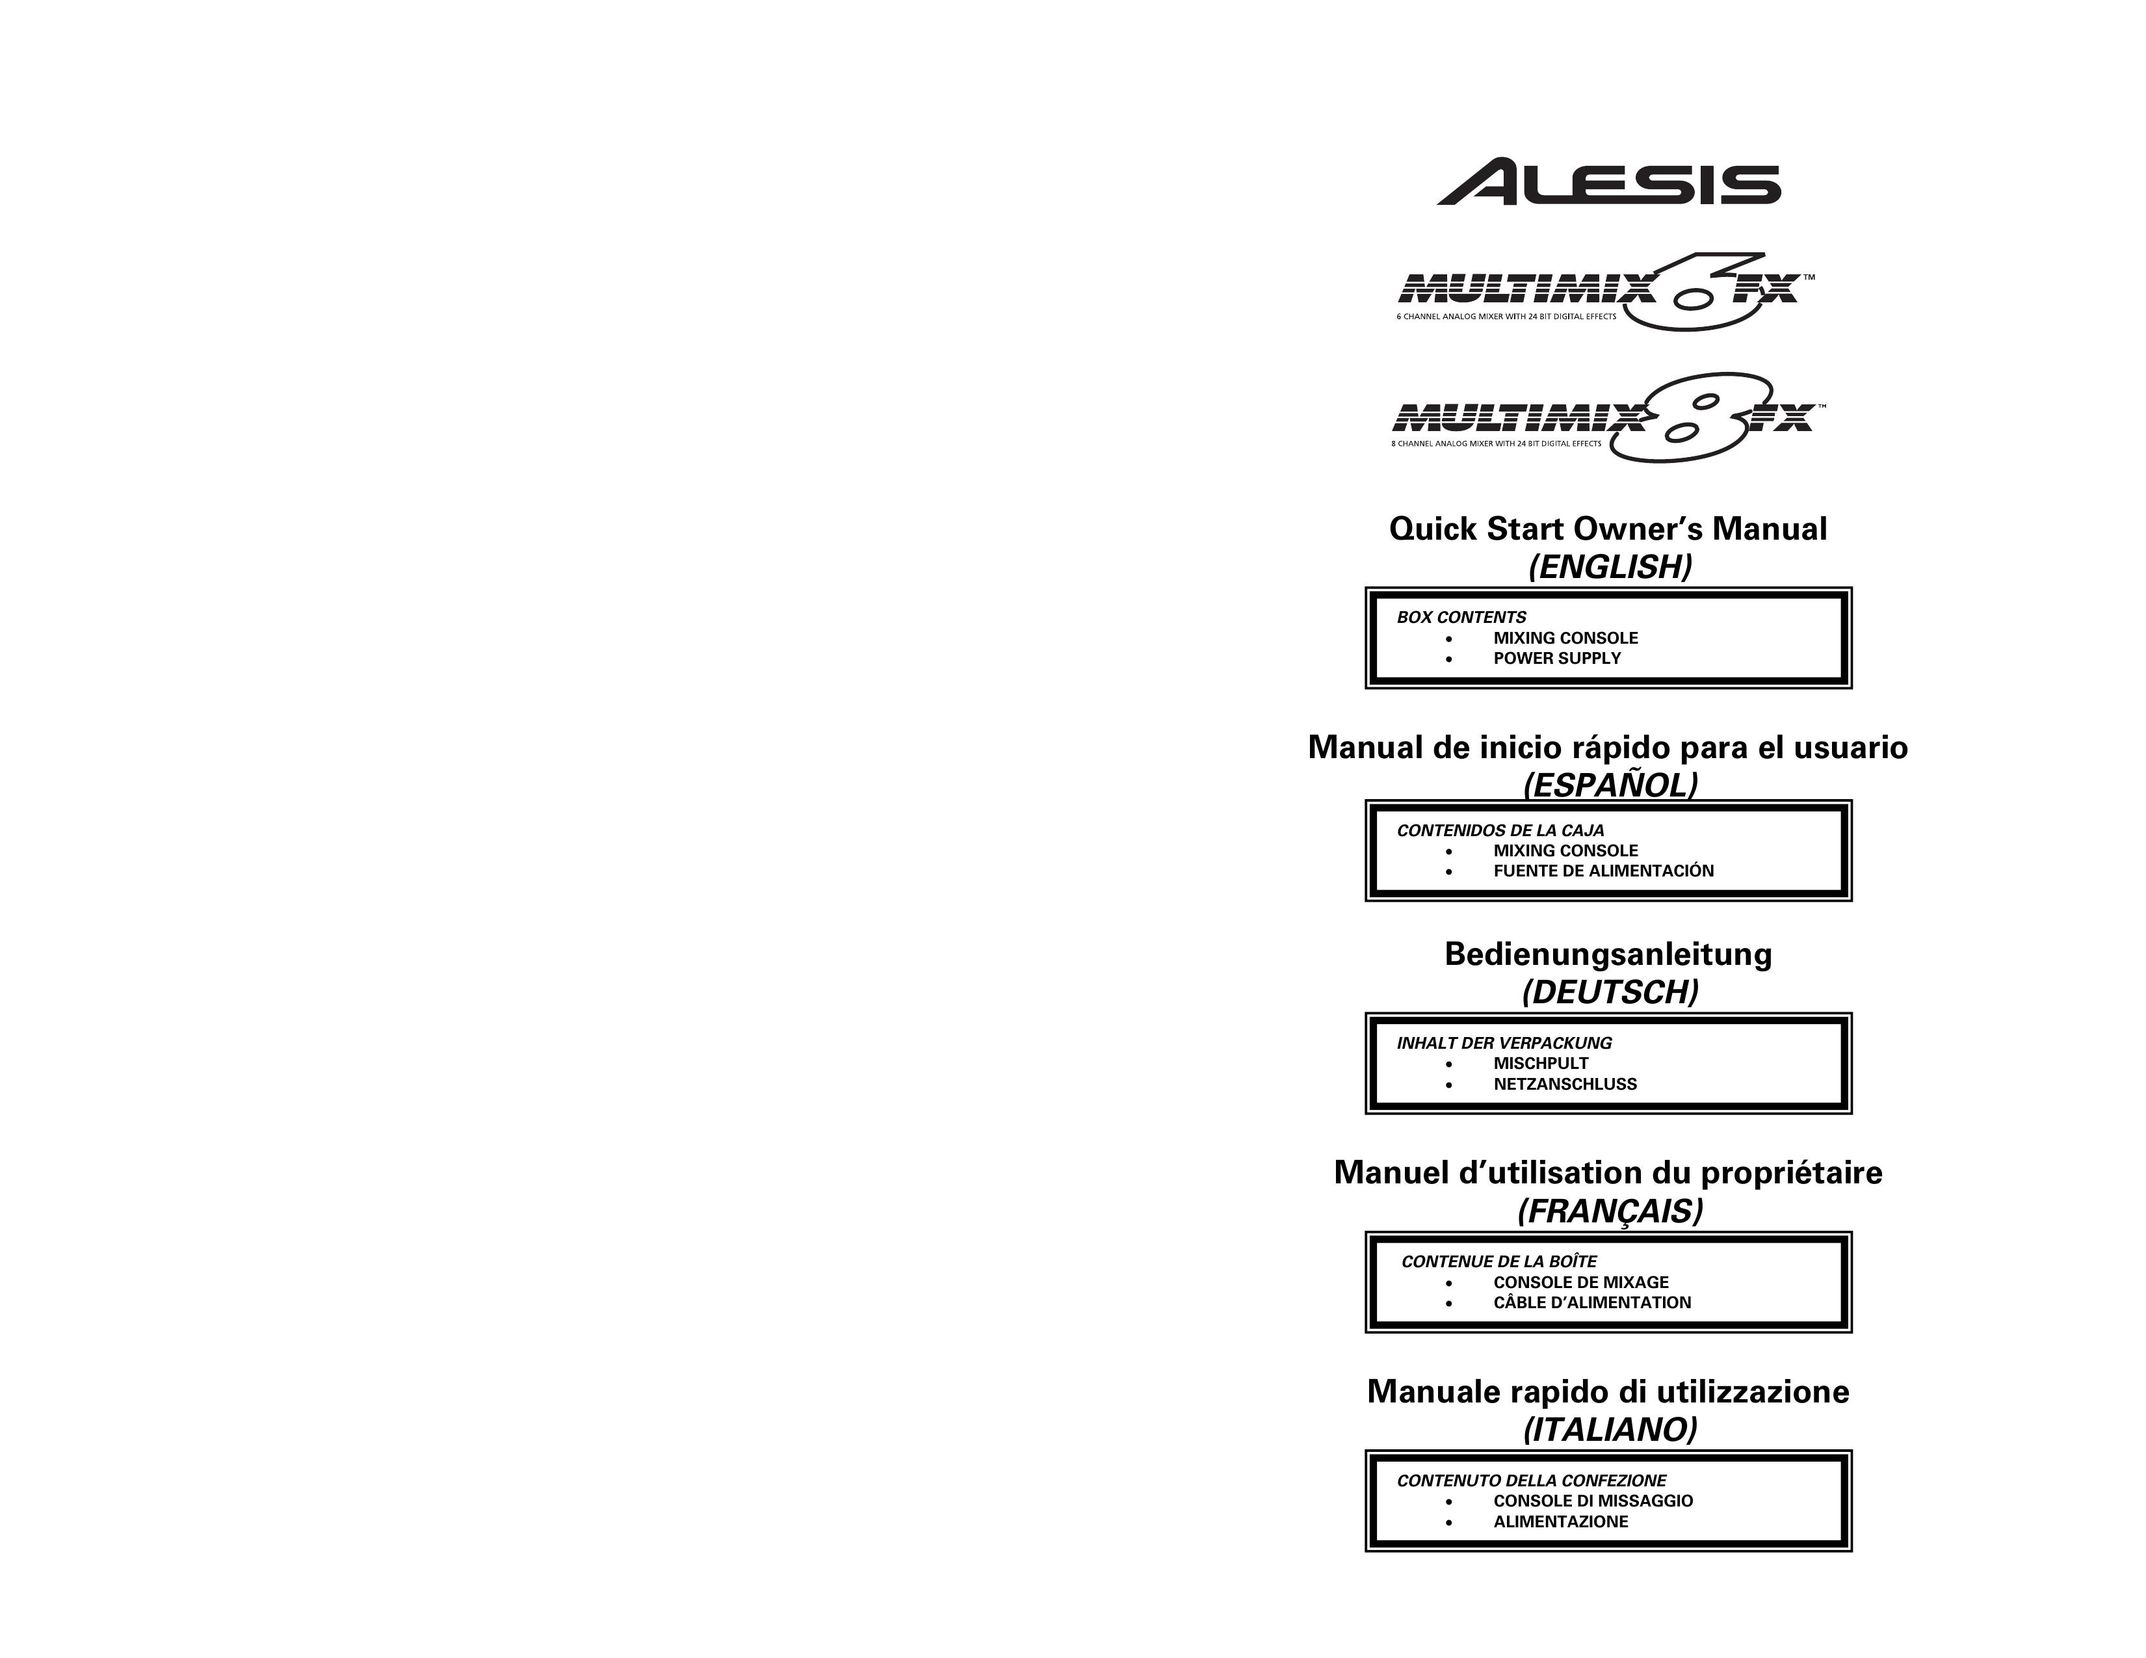 Alesis 8FX TV Video Accessories User Manual